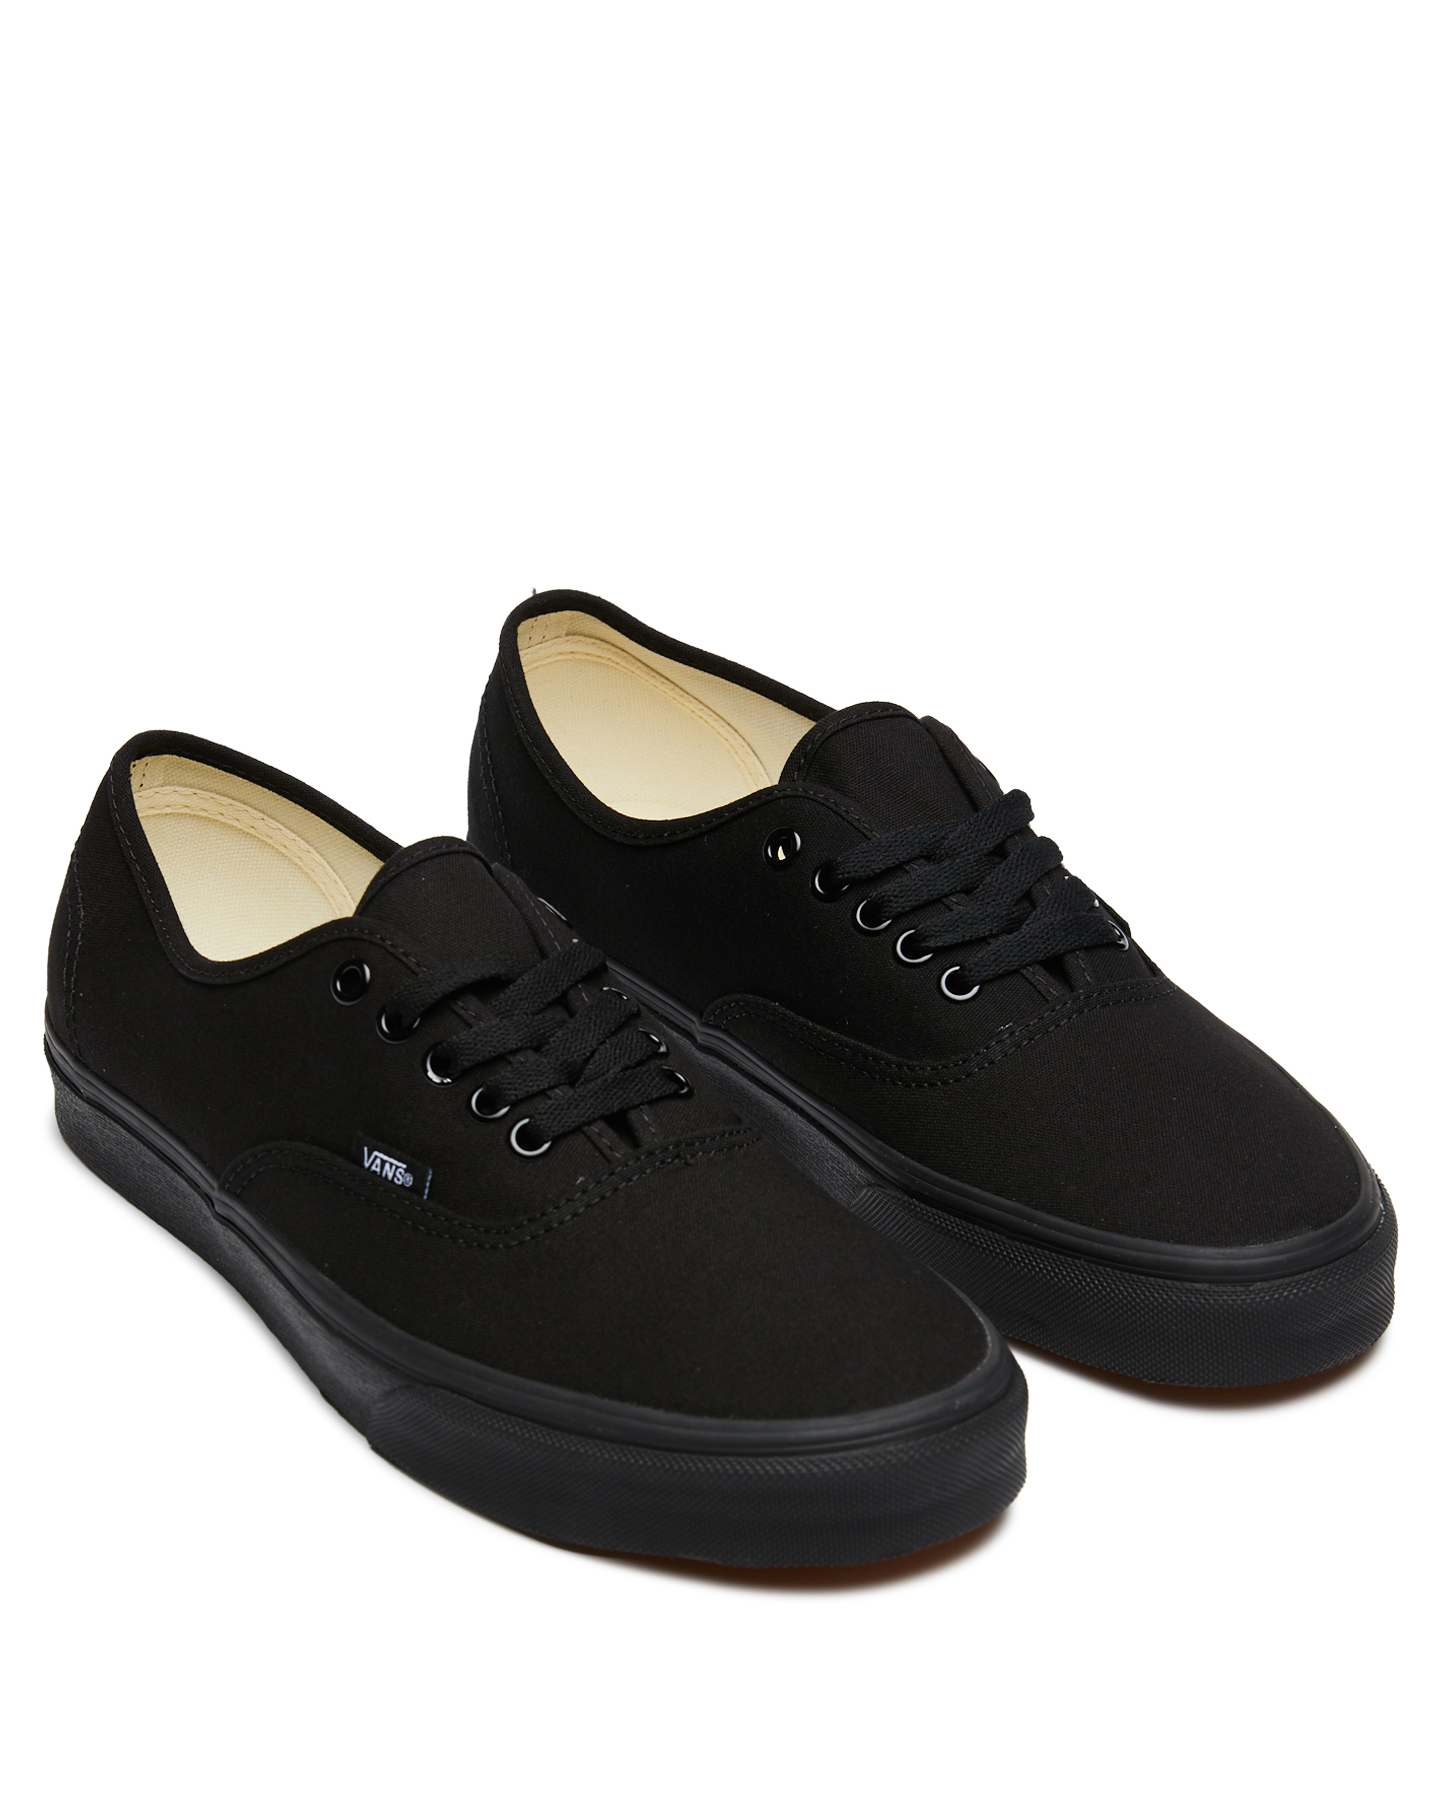 Vans All Black Shoe Online Sale, UP TO 